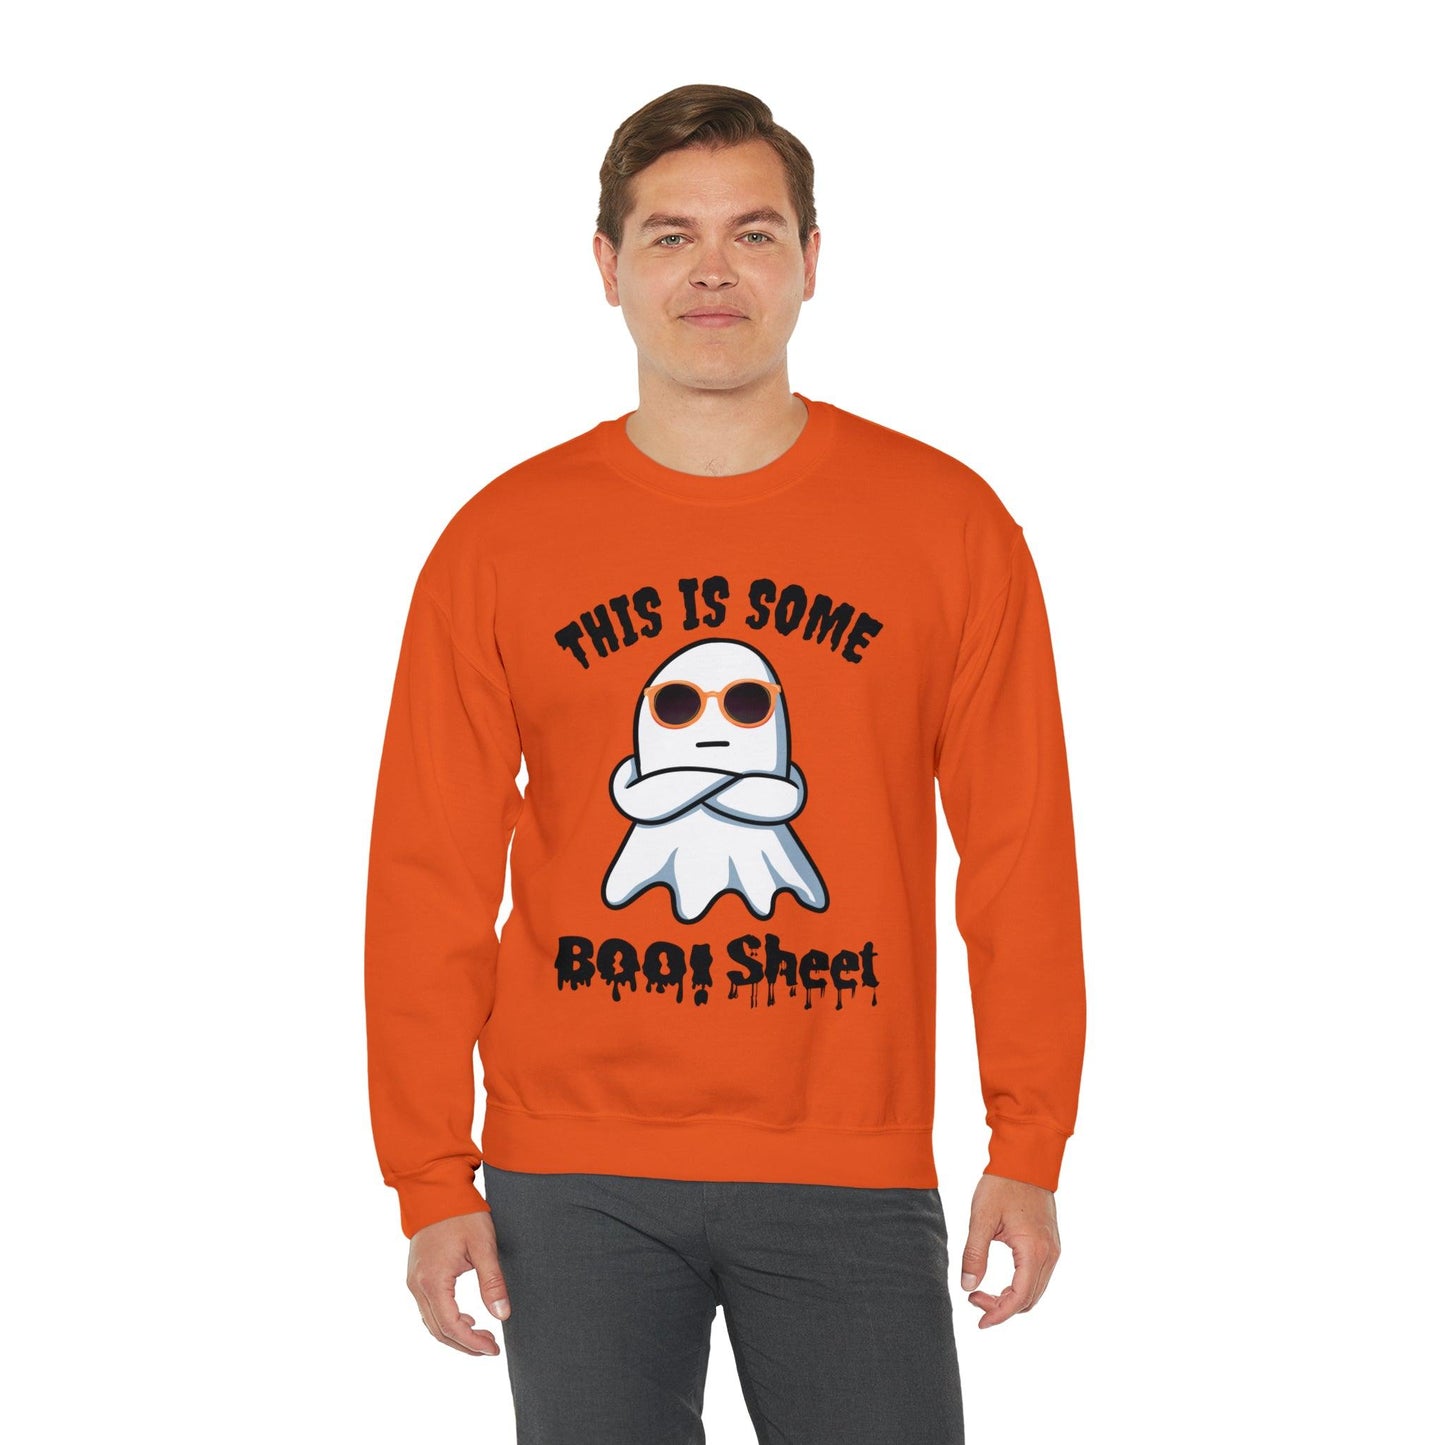 This Is Some Boo Sheet Funny HalloweenSweatshirt Funny Halloween Costume Spooky Season Tee Boo Ghost Sweatshirt Gift for Birthday Christmas